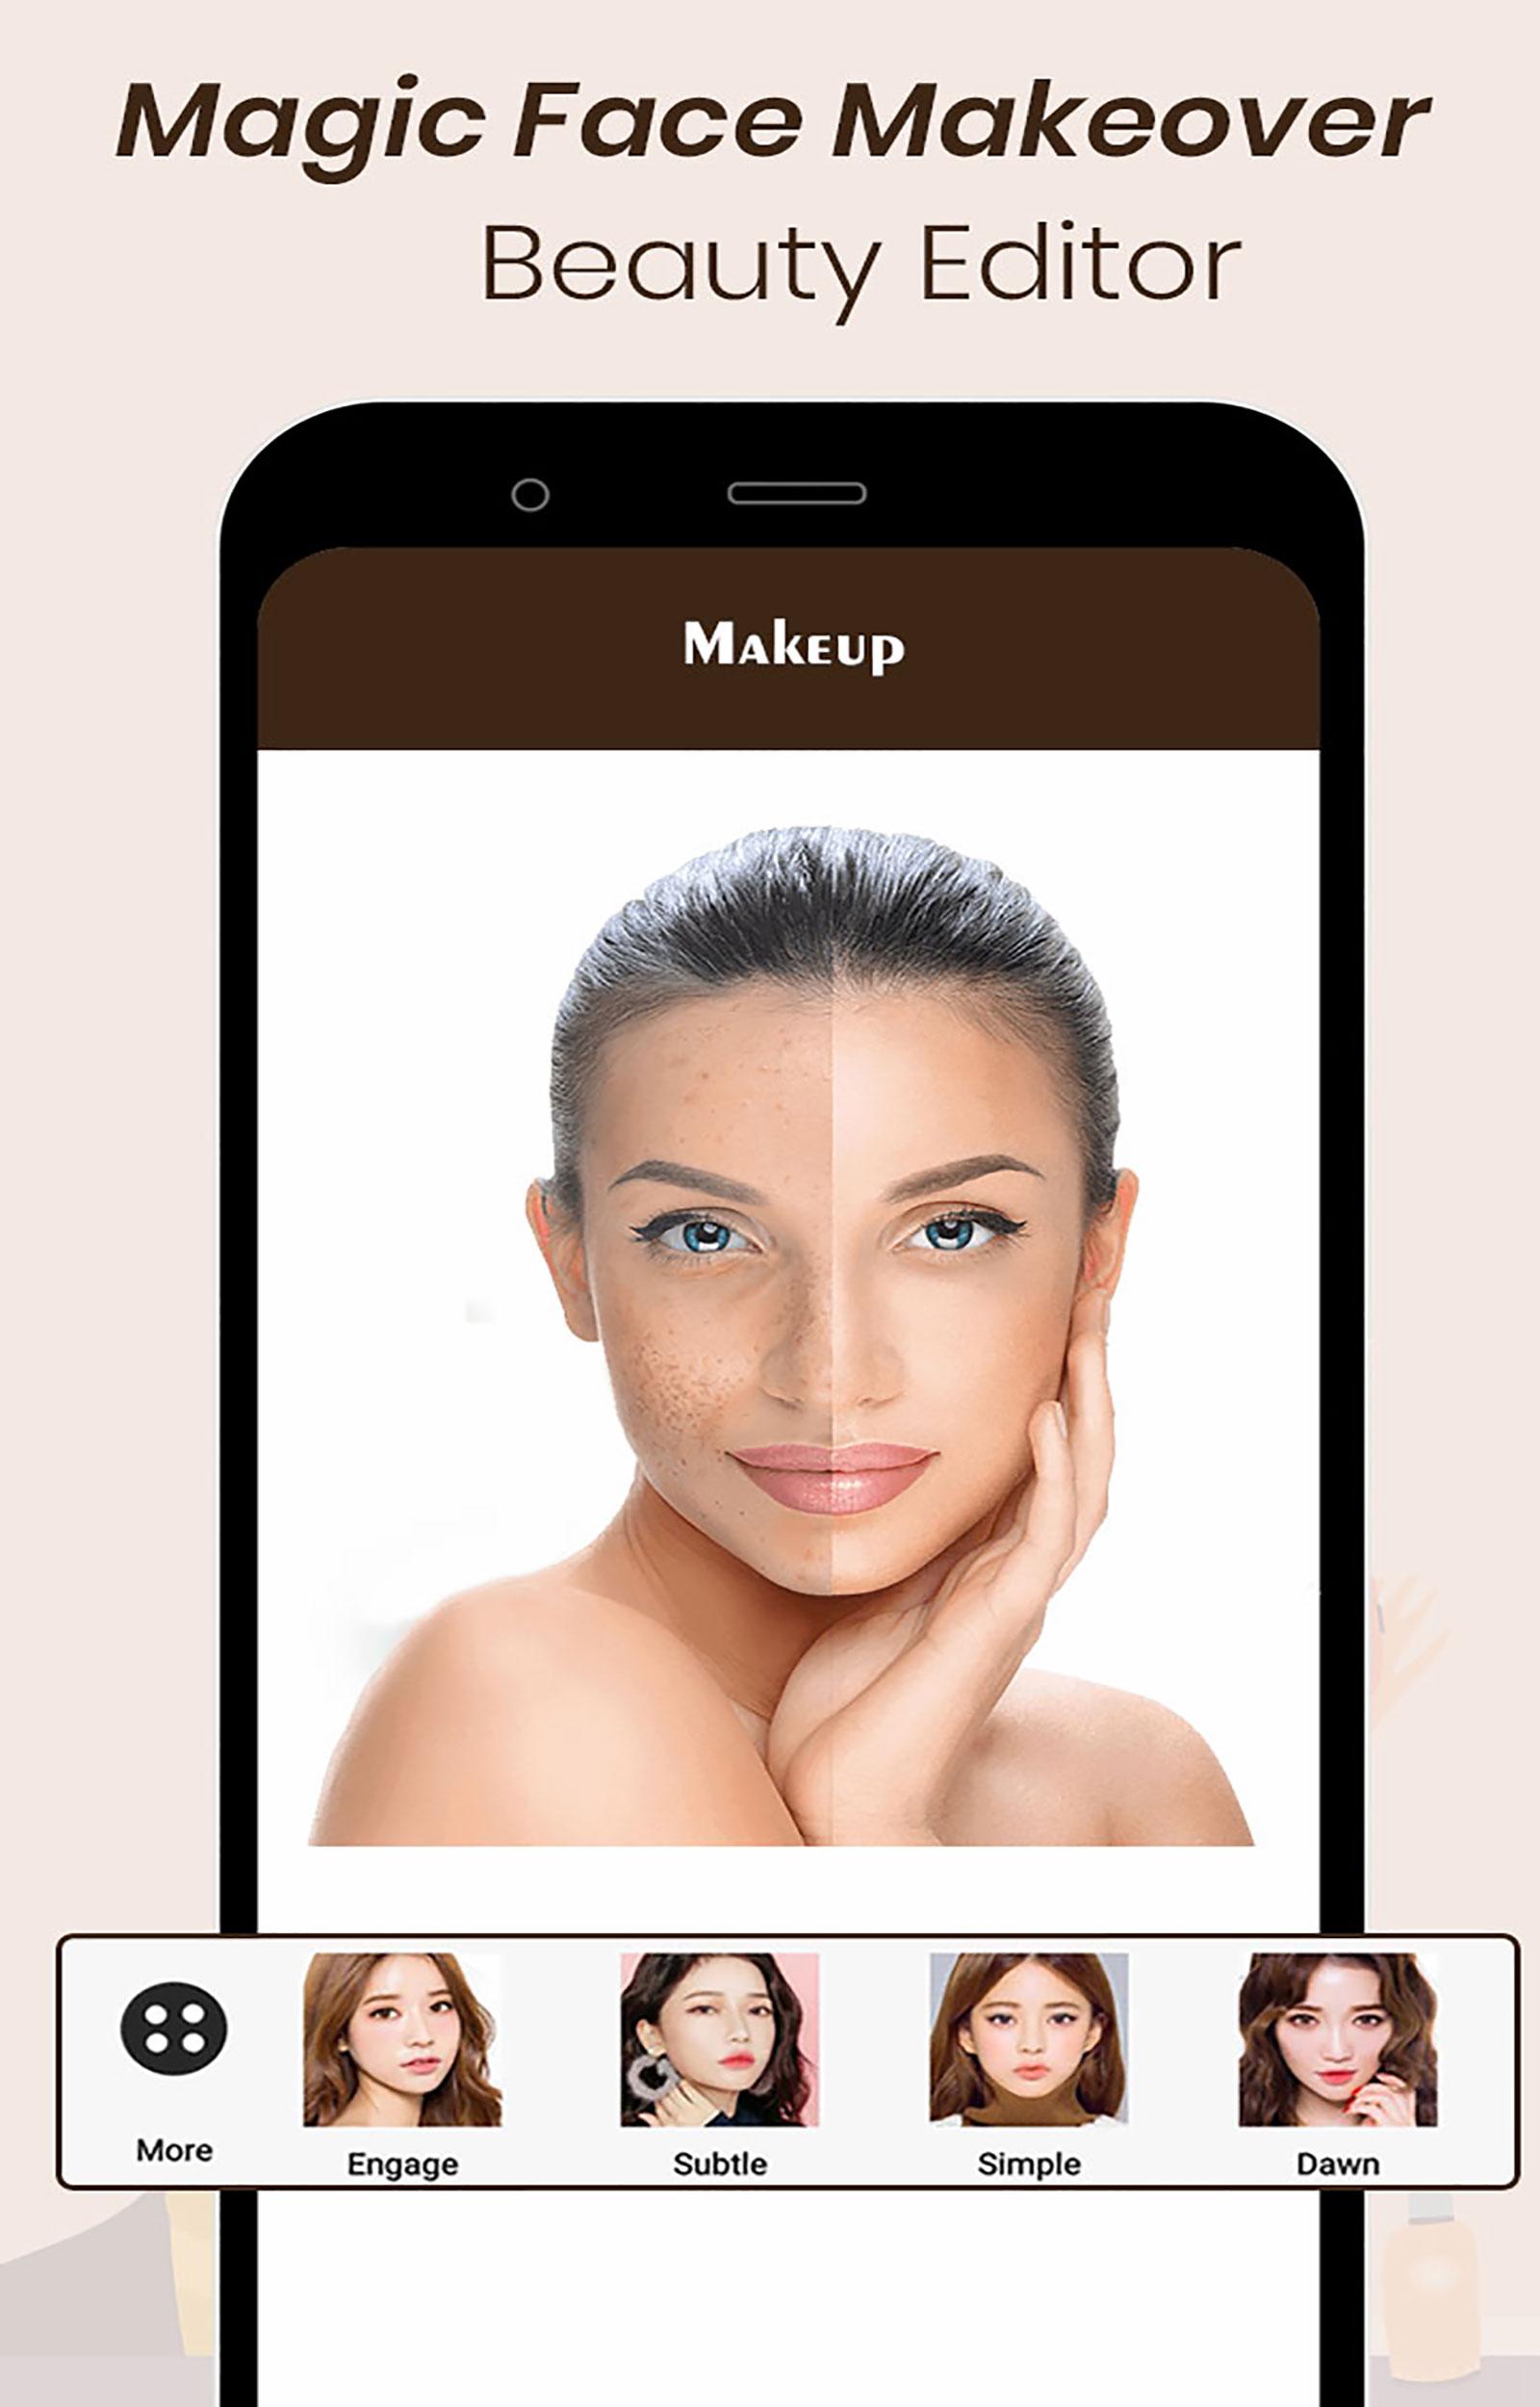 Magic Face Makeover - Beauty Editor 1.0 Screenshot 11